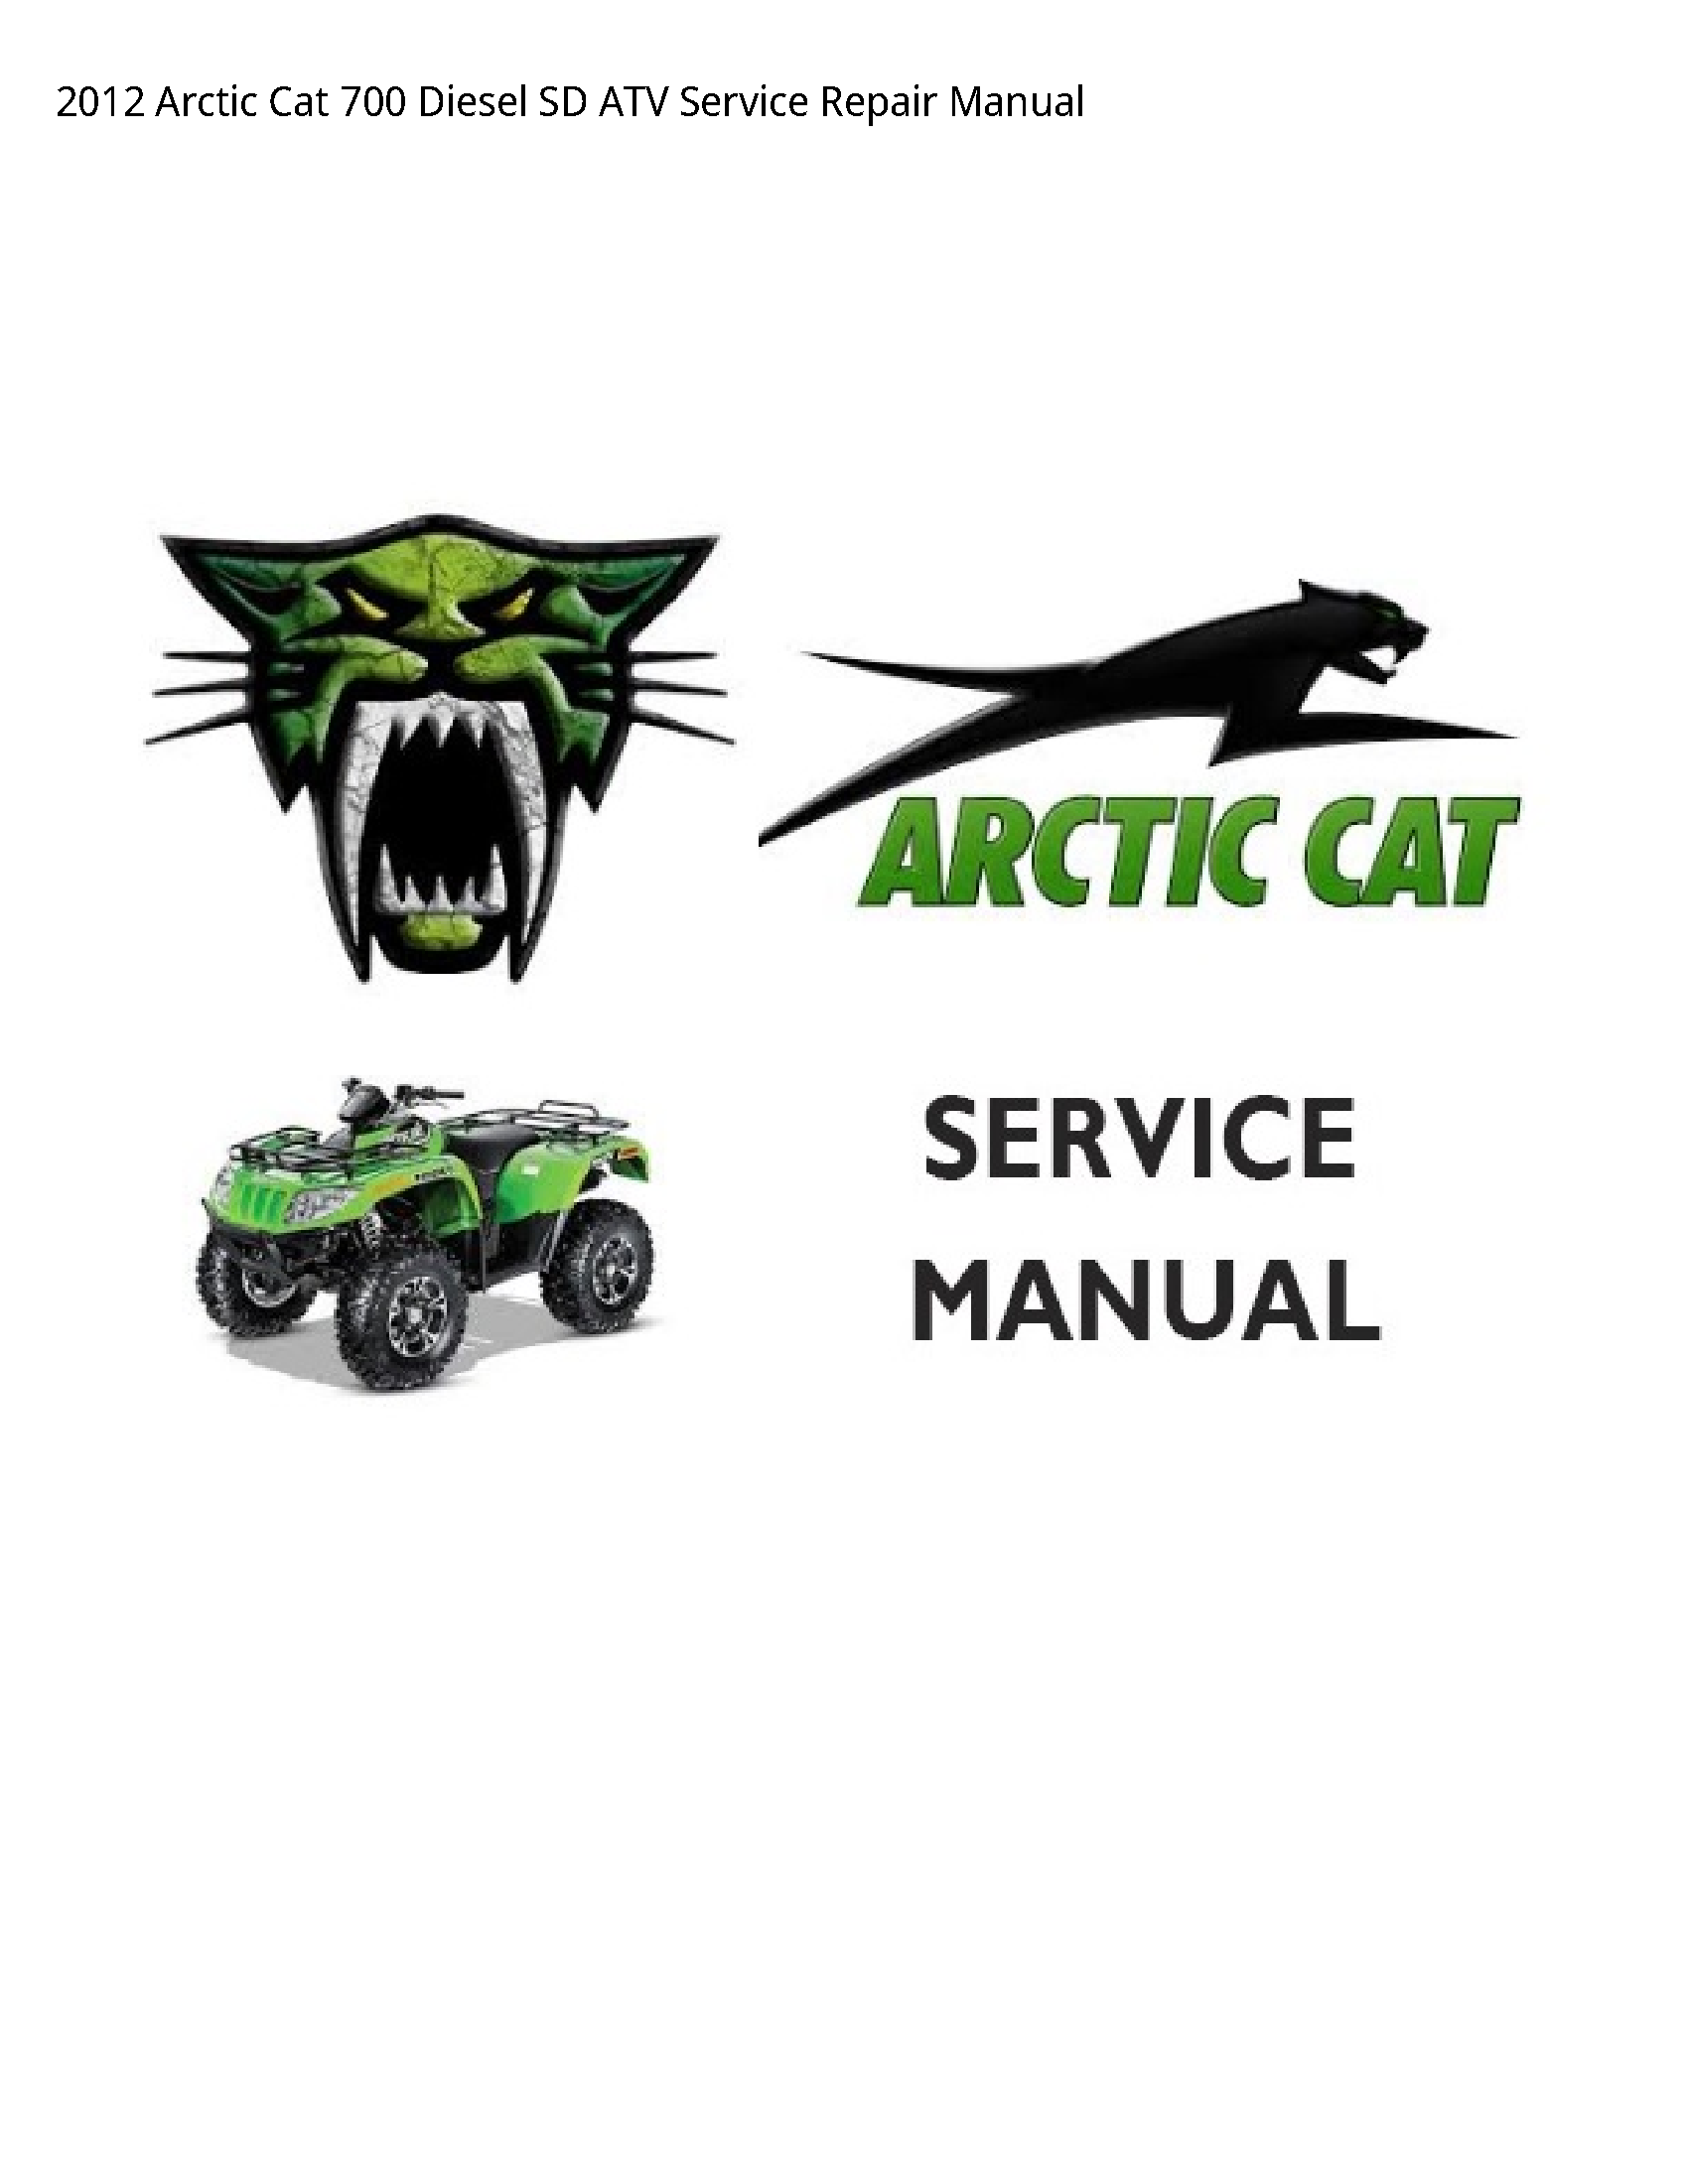 Arctic Cat 700 Diesel SD ATV manual